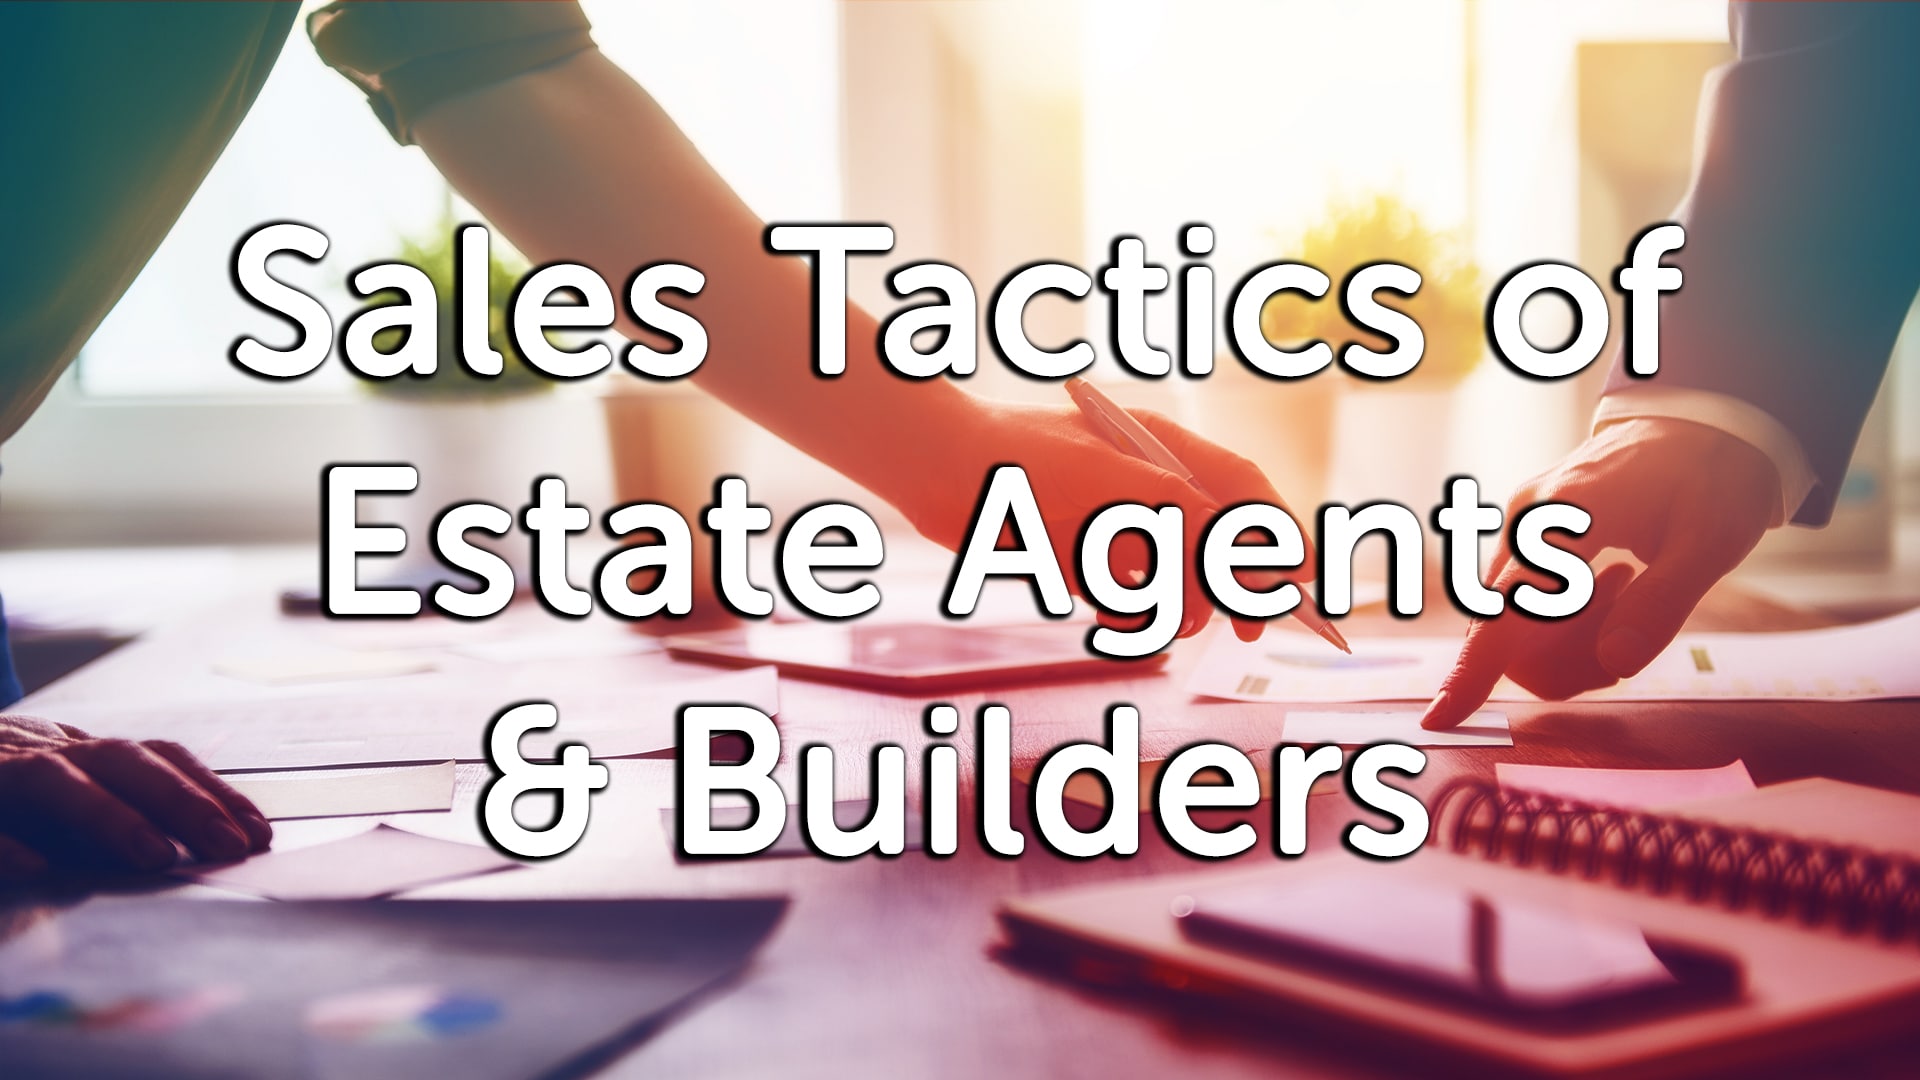 Sales Tactics of Estate Agents & Builders